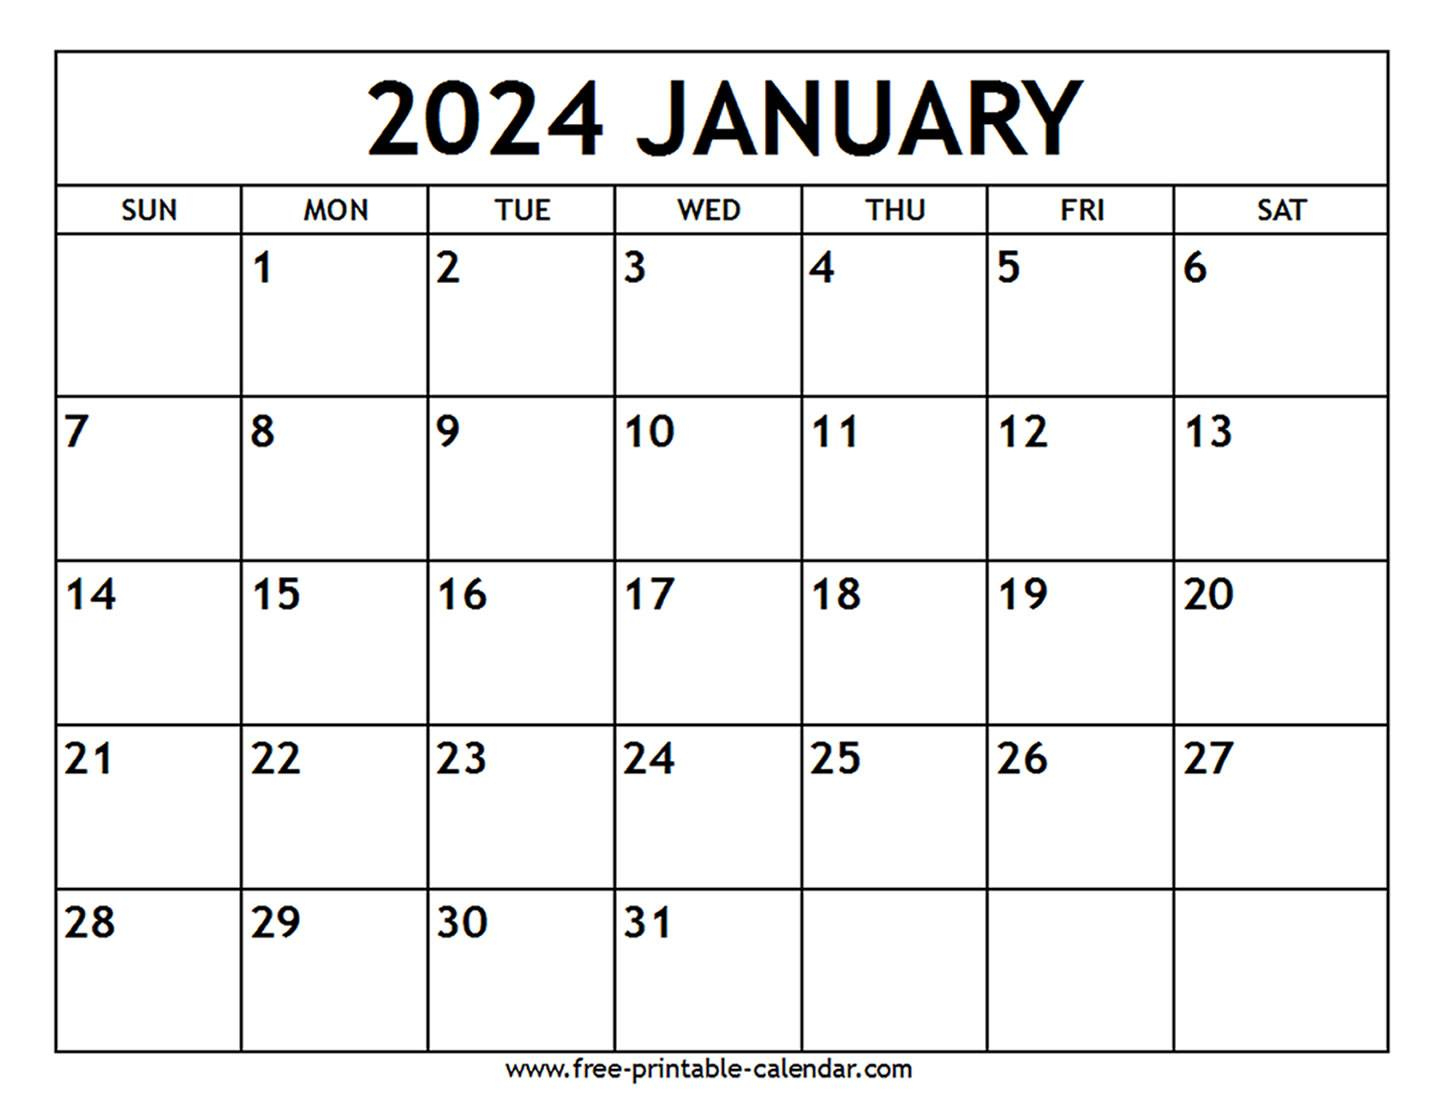 January 2024 Calendar - Free-Printable-Calendar | Jan 2024 Calendar Printable Free